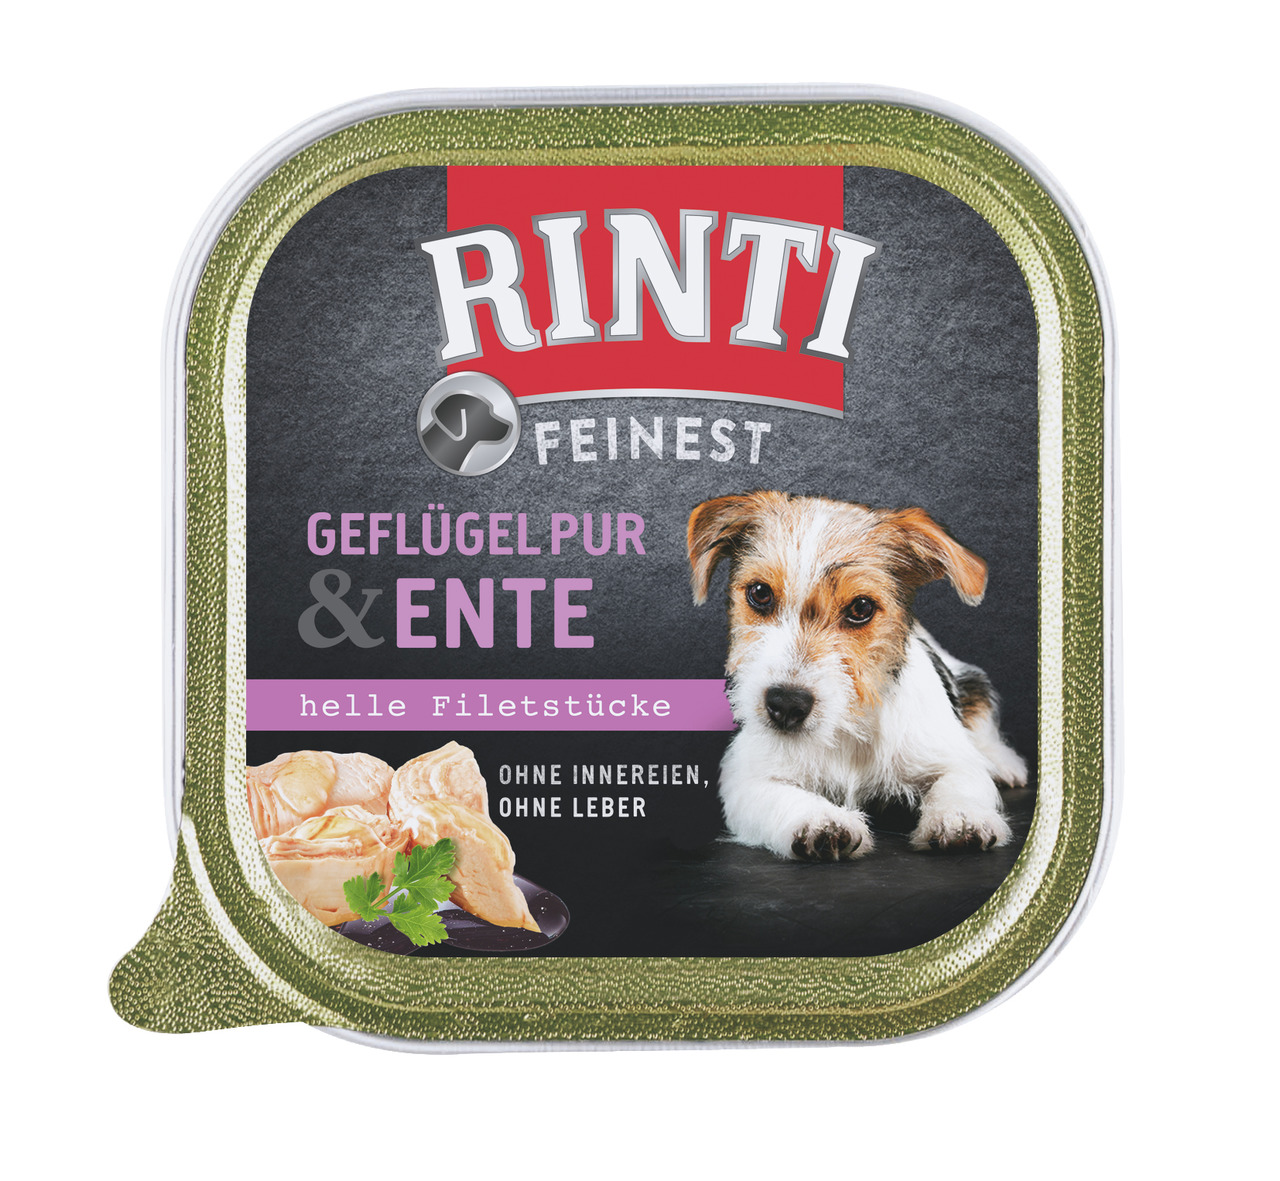 RINTI Feinest Geflügel Pur & Ente 150g Hundenassfutter